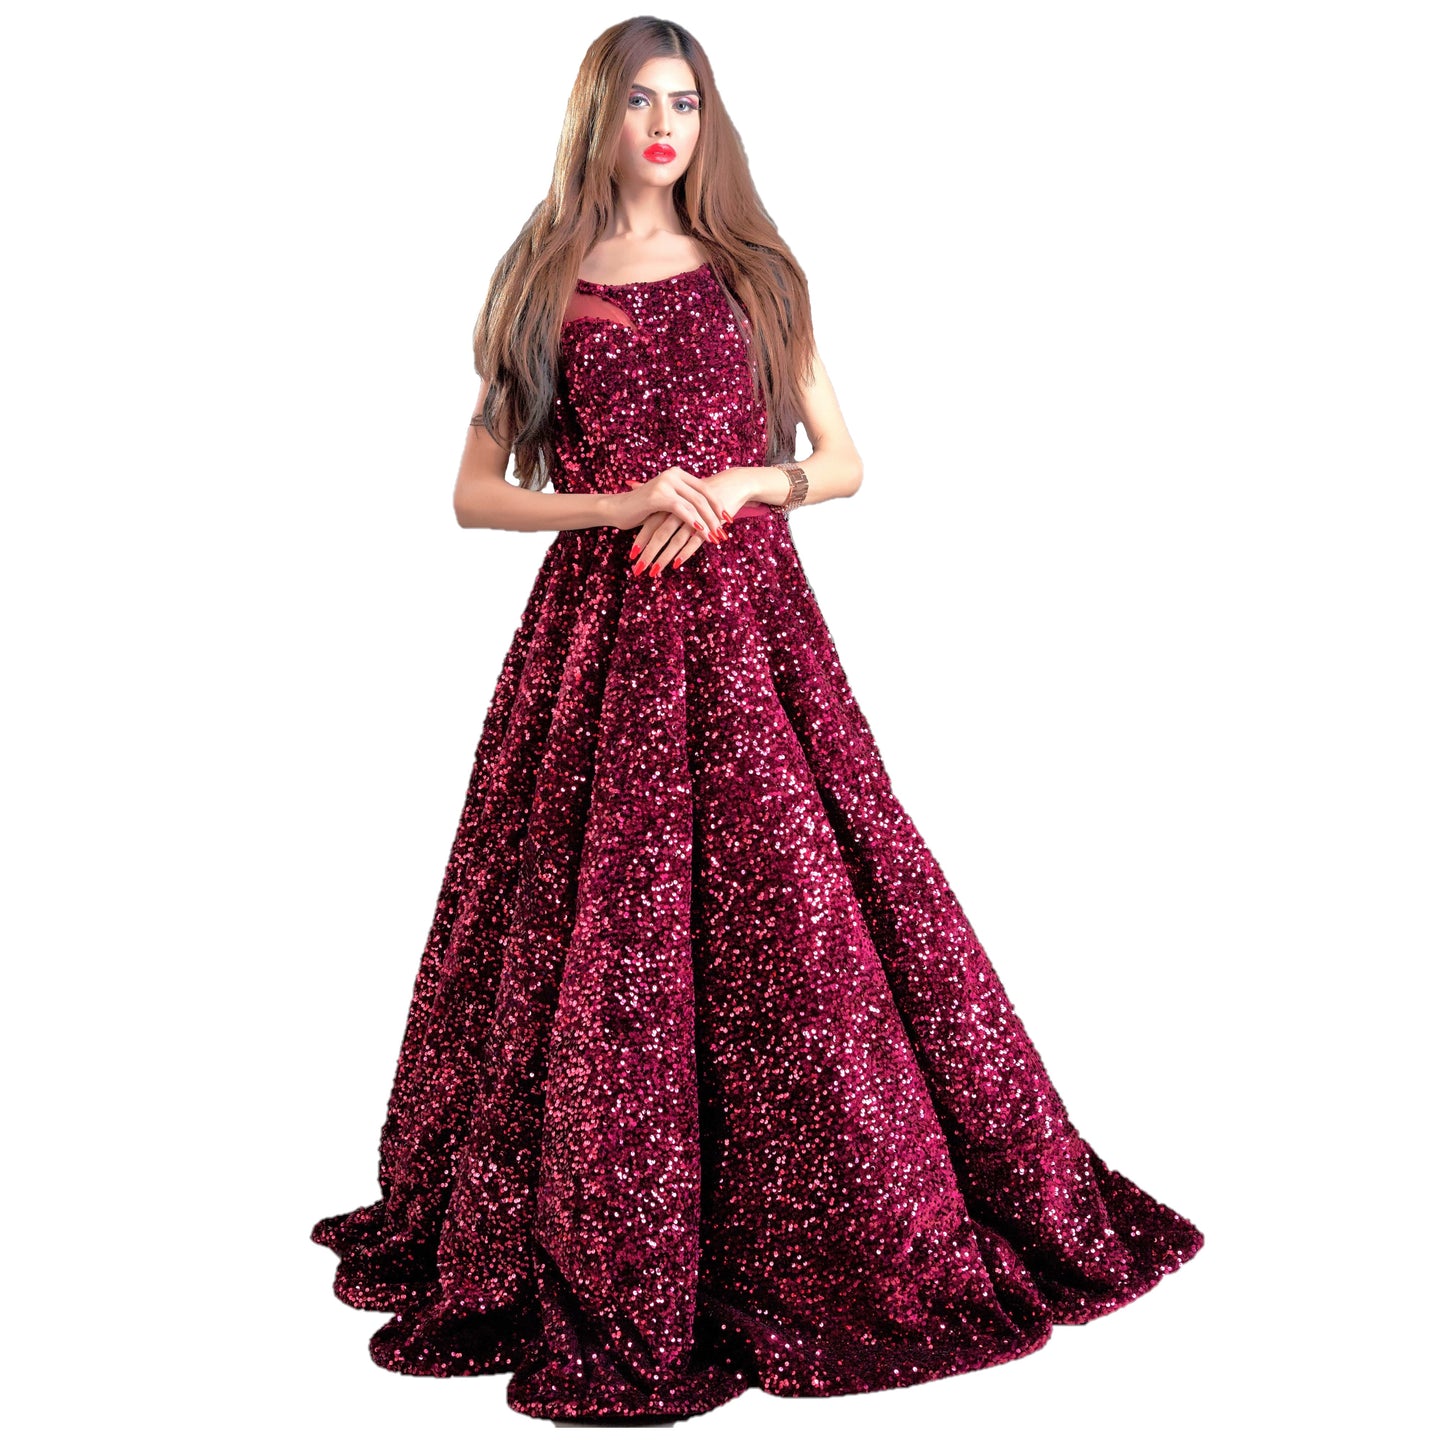 Maharani's Designer Ball (Princess) Gown - Dark Maroon with Glittering Sequins & Thread Work